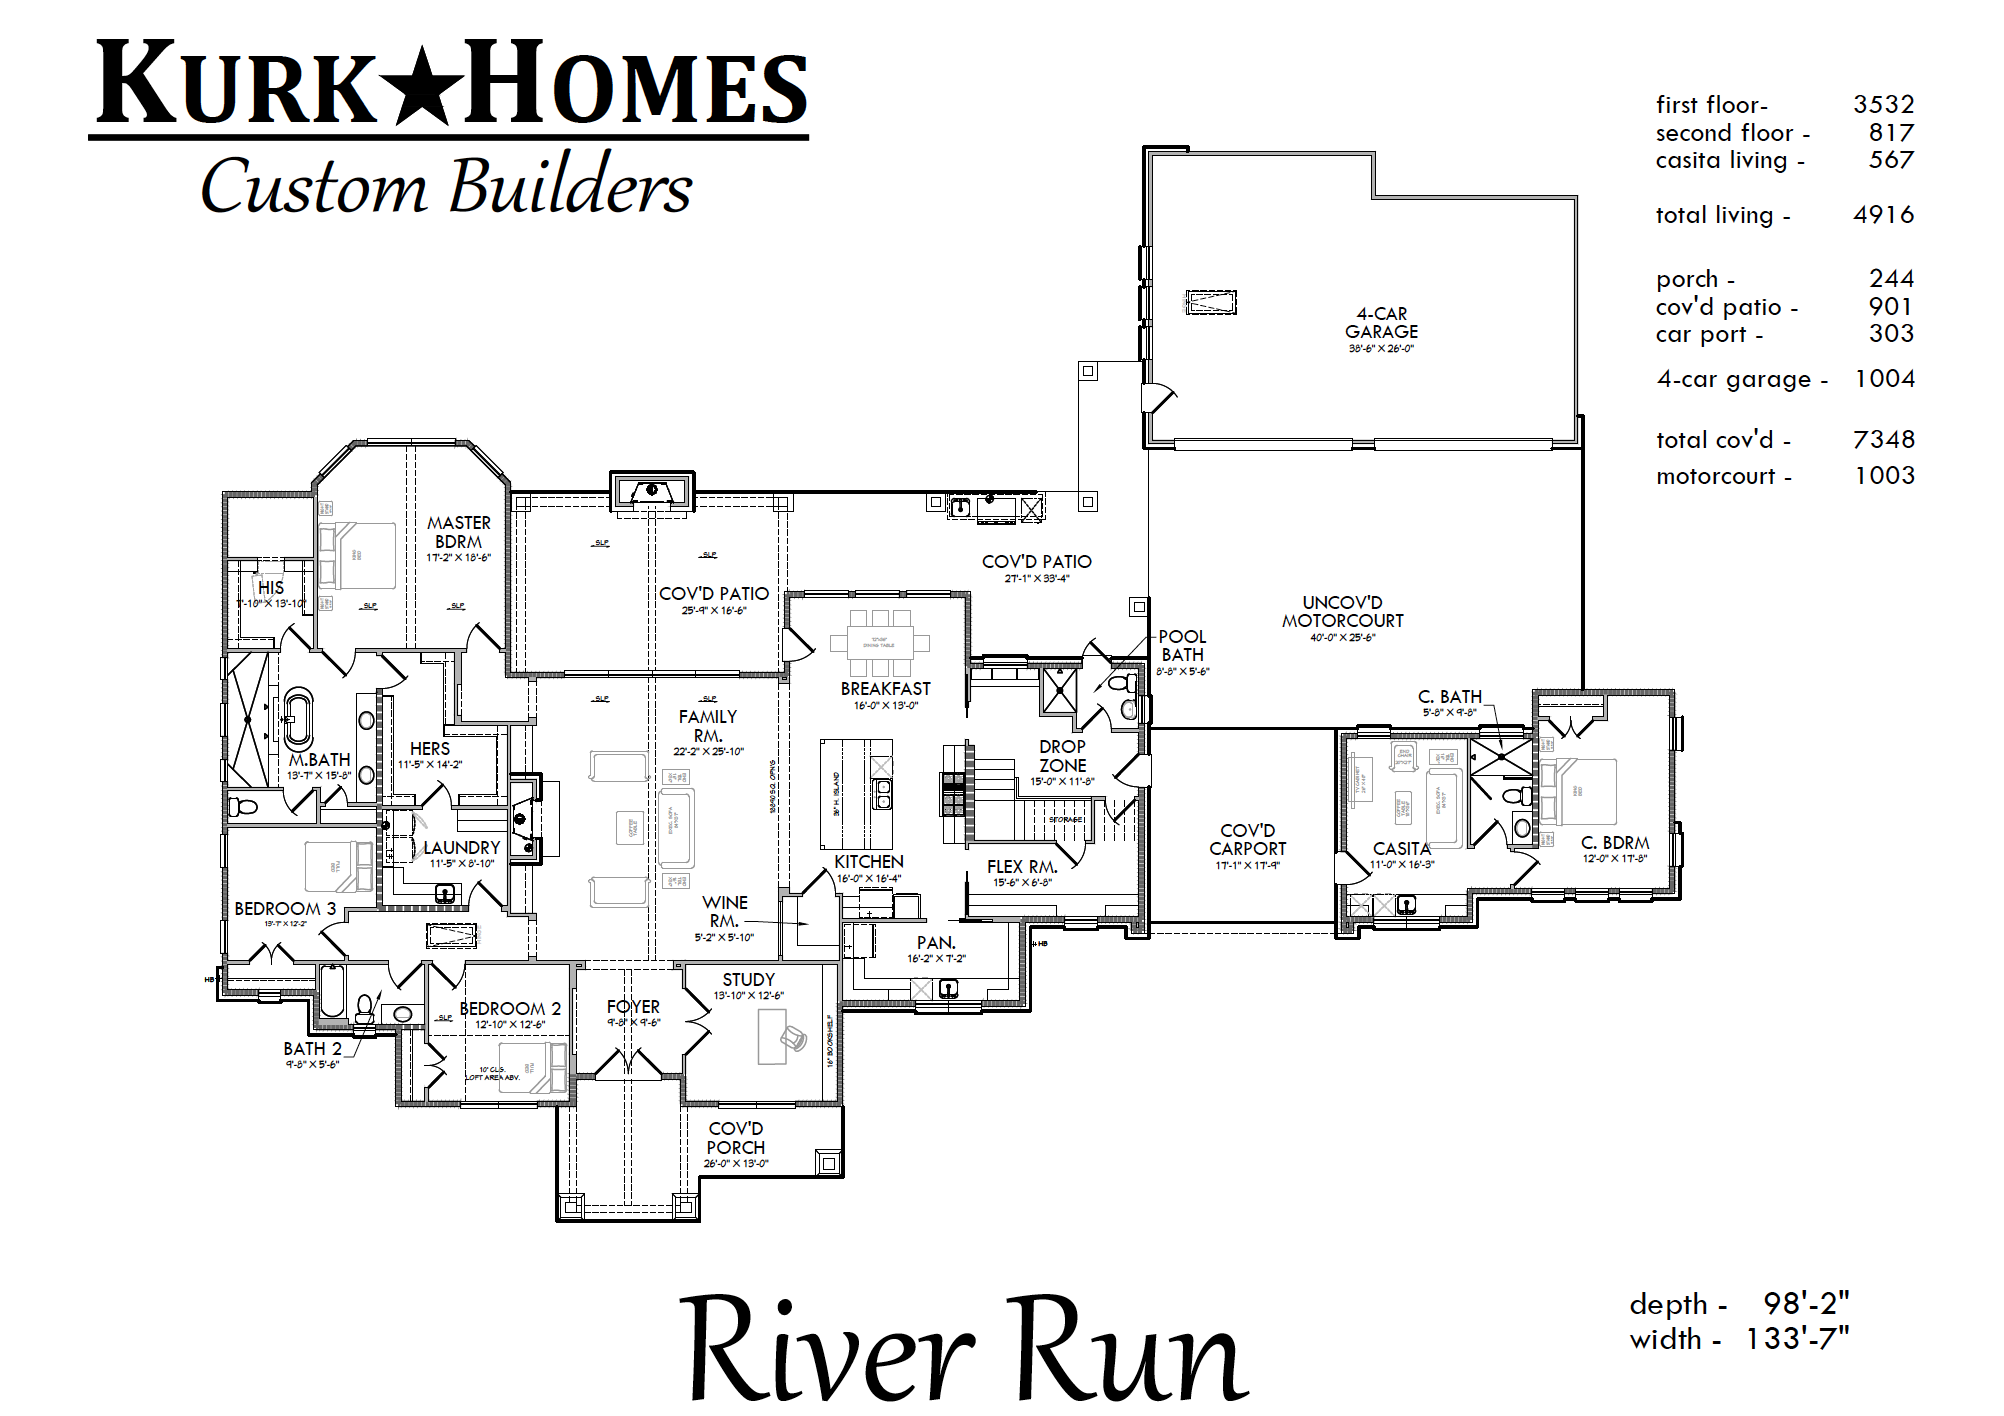 River Run floor plan